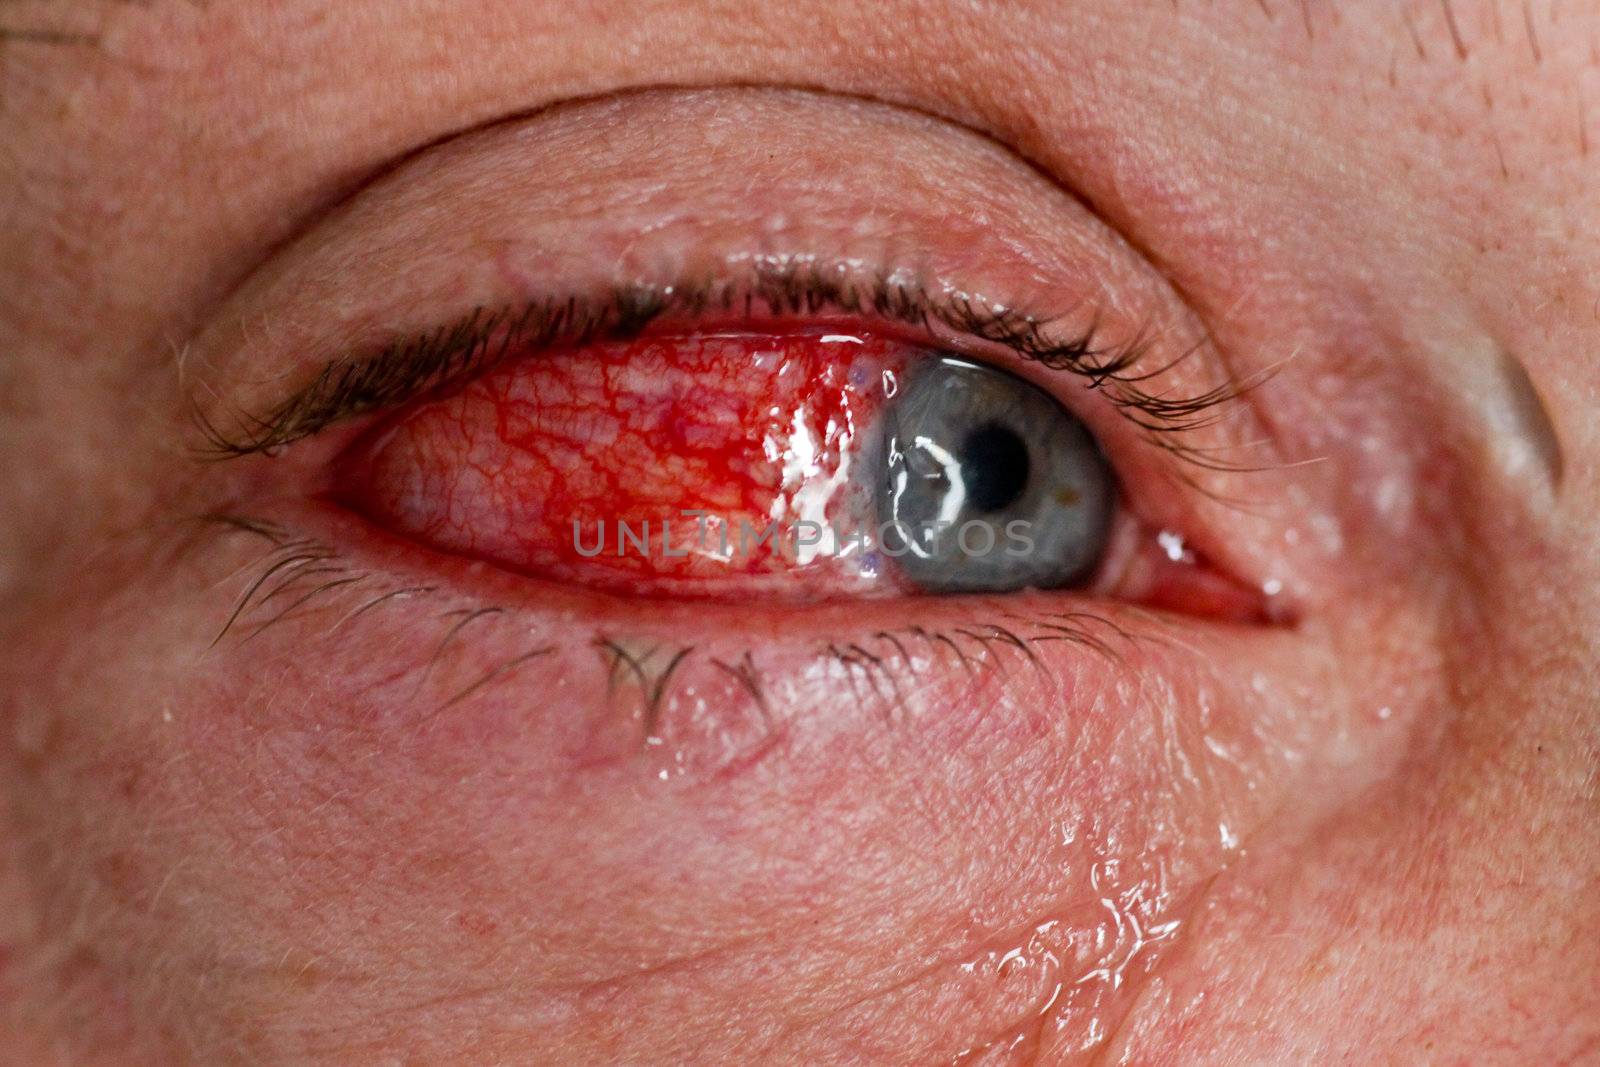 severe eye injury with blood running eye - close-up